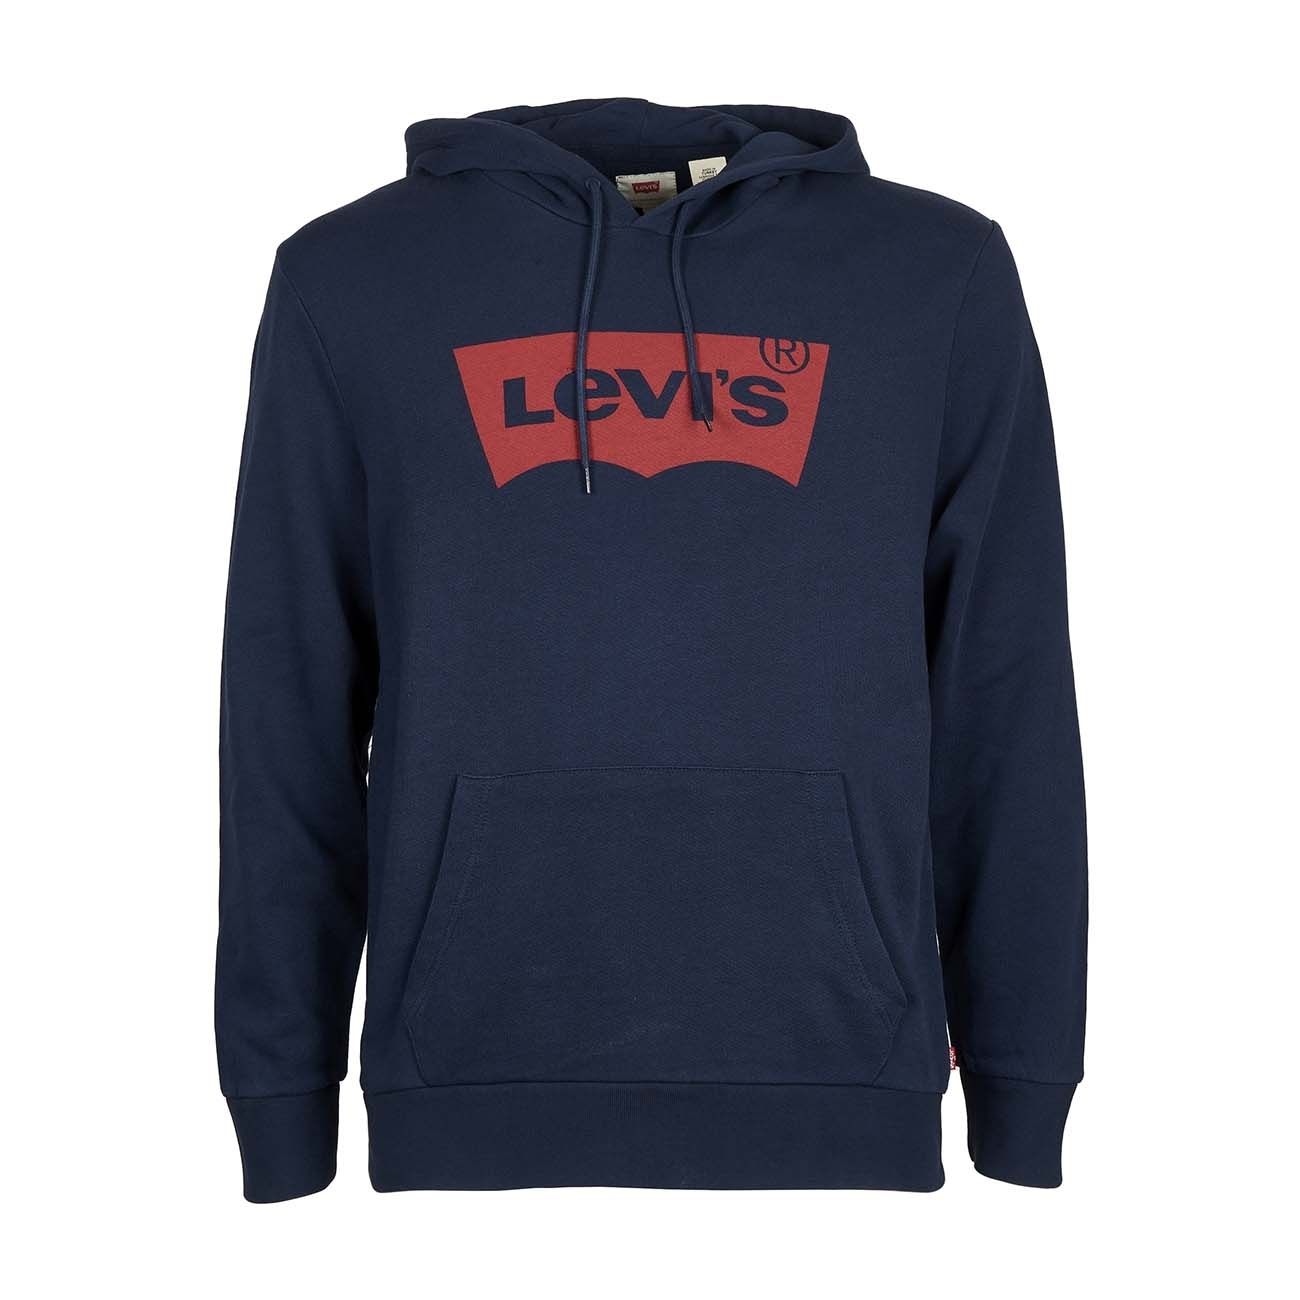 levis navy hoodie